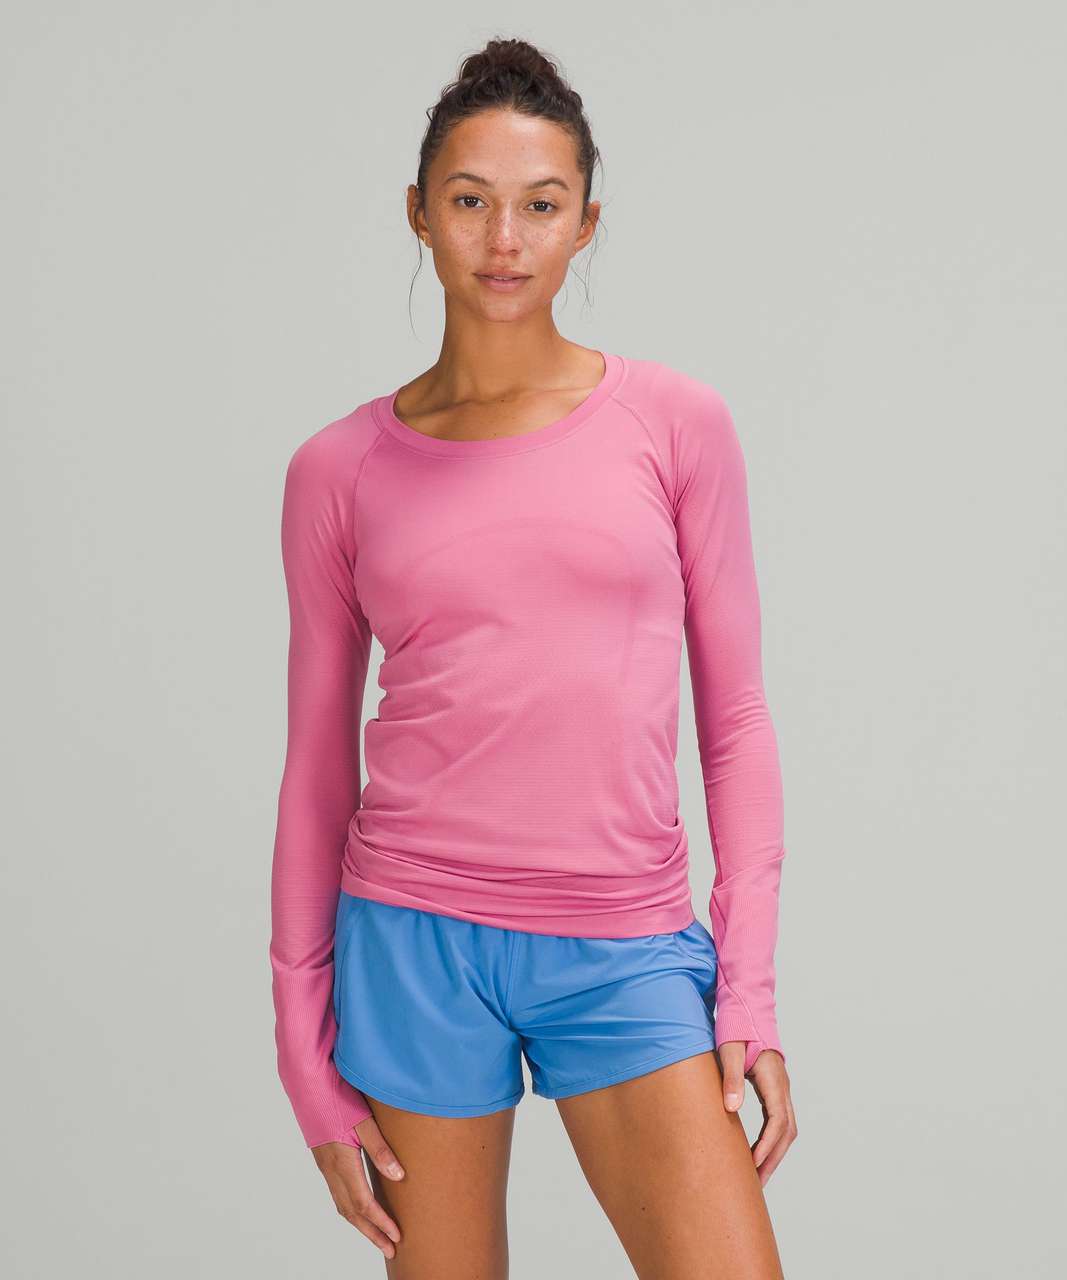 Lululemon Swiftly Tech Long Sleeve Shirt 2.0 - Pink Blossom / Pink Blossom